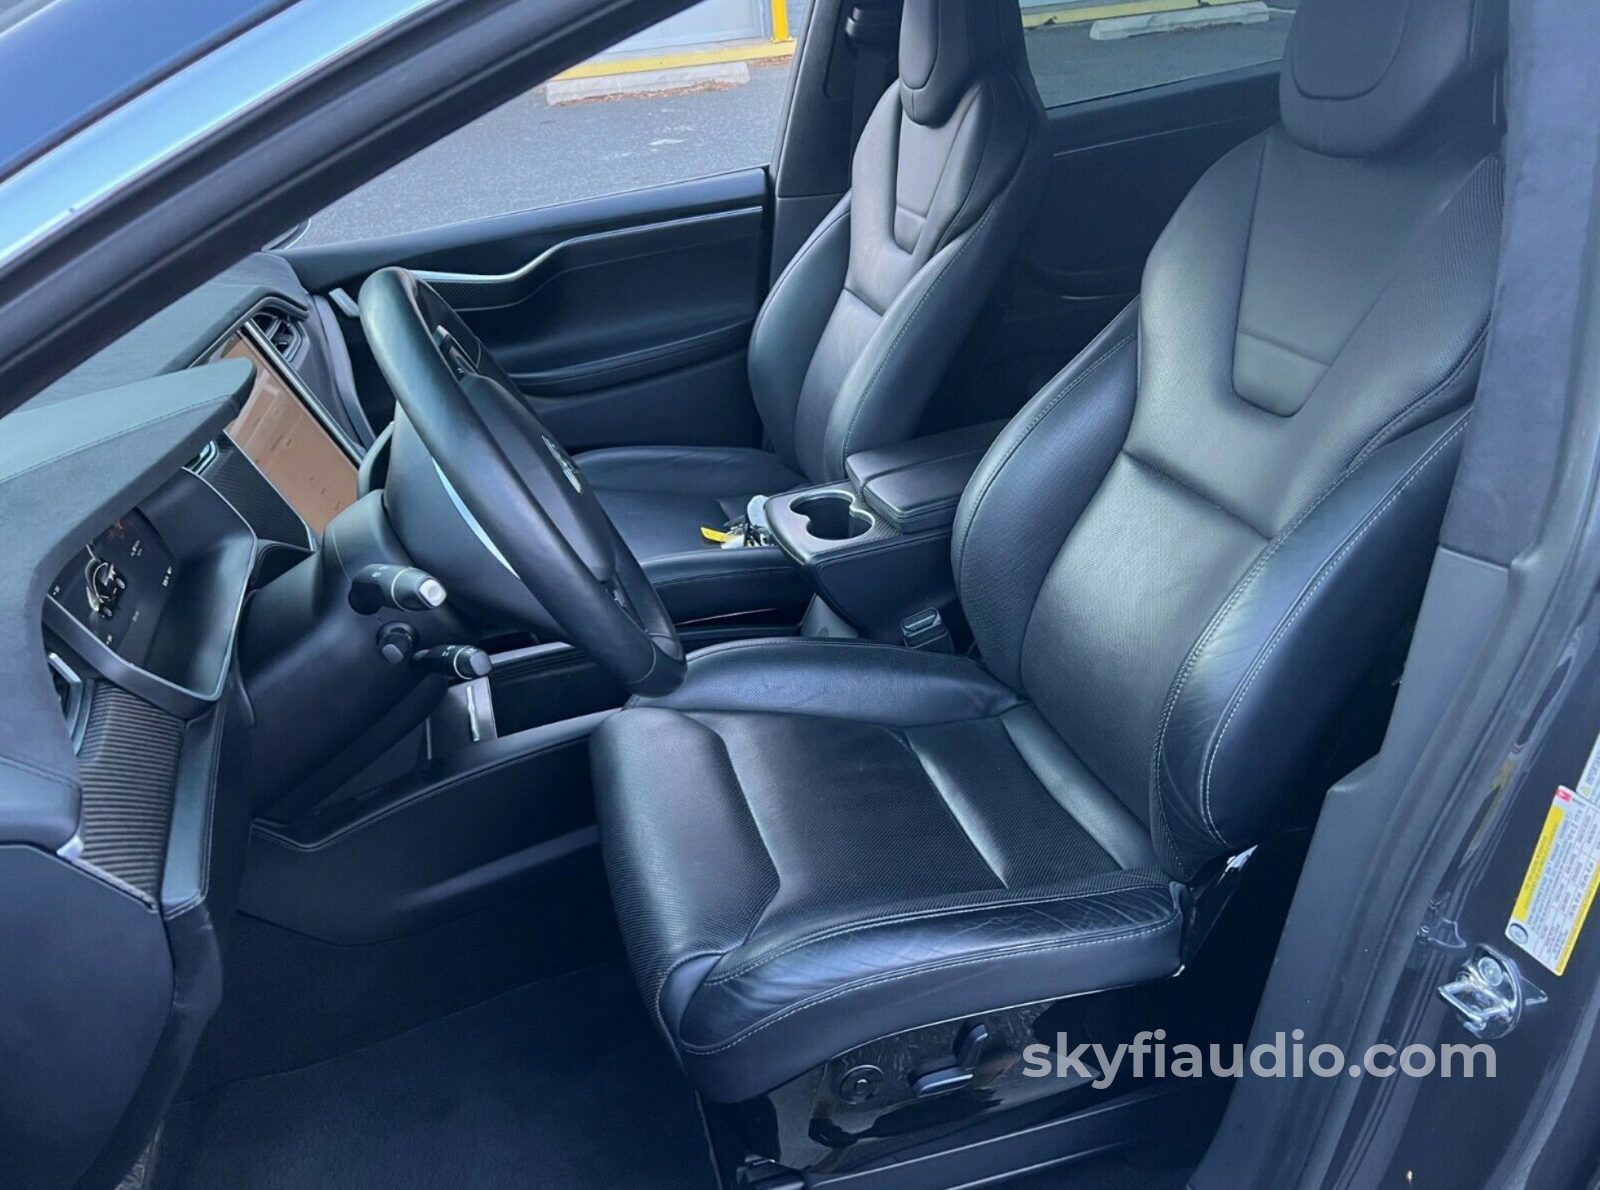 2016 Tesla Model X 90D Midnight Silver Metallic Heavily Optioned $115K+ Msrp Vehicle